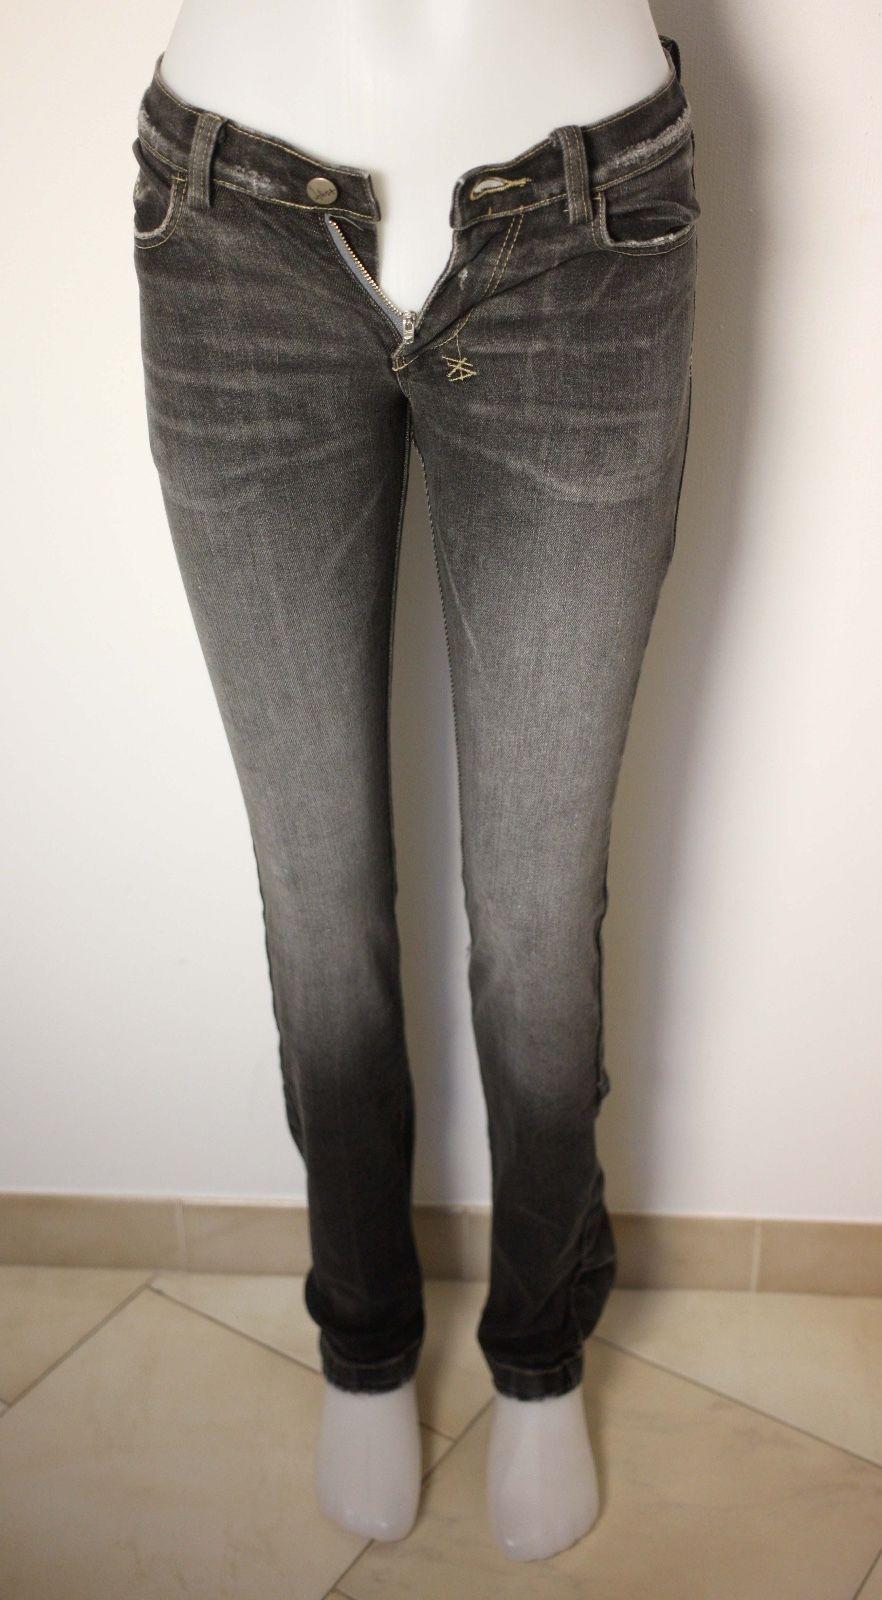 Ksubi Ladies Dark Grey Faded Black Jeans Uk 8 Used Very Good Condition Very Chic Free Postage Europe